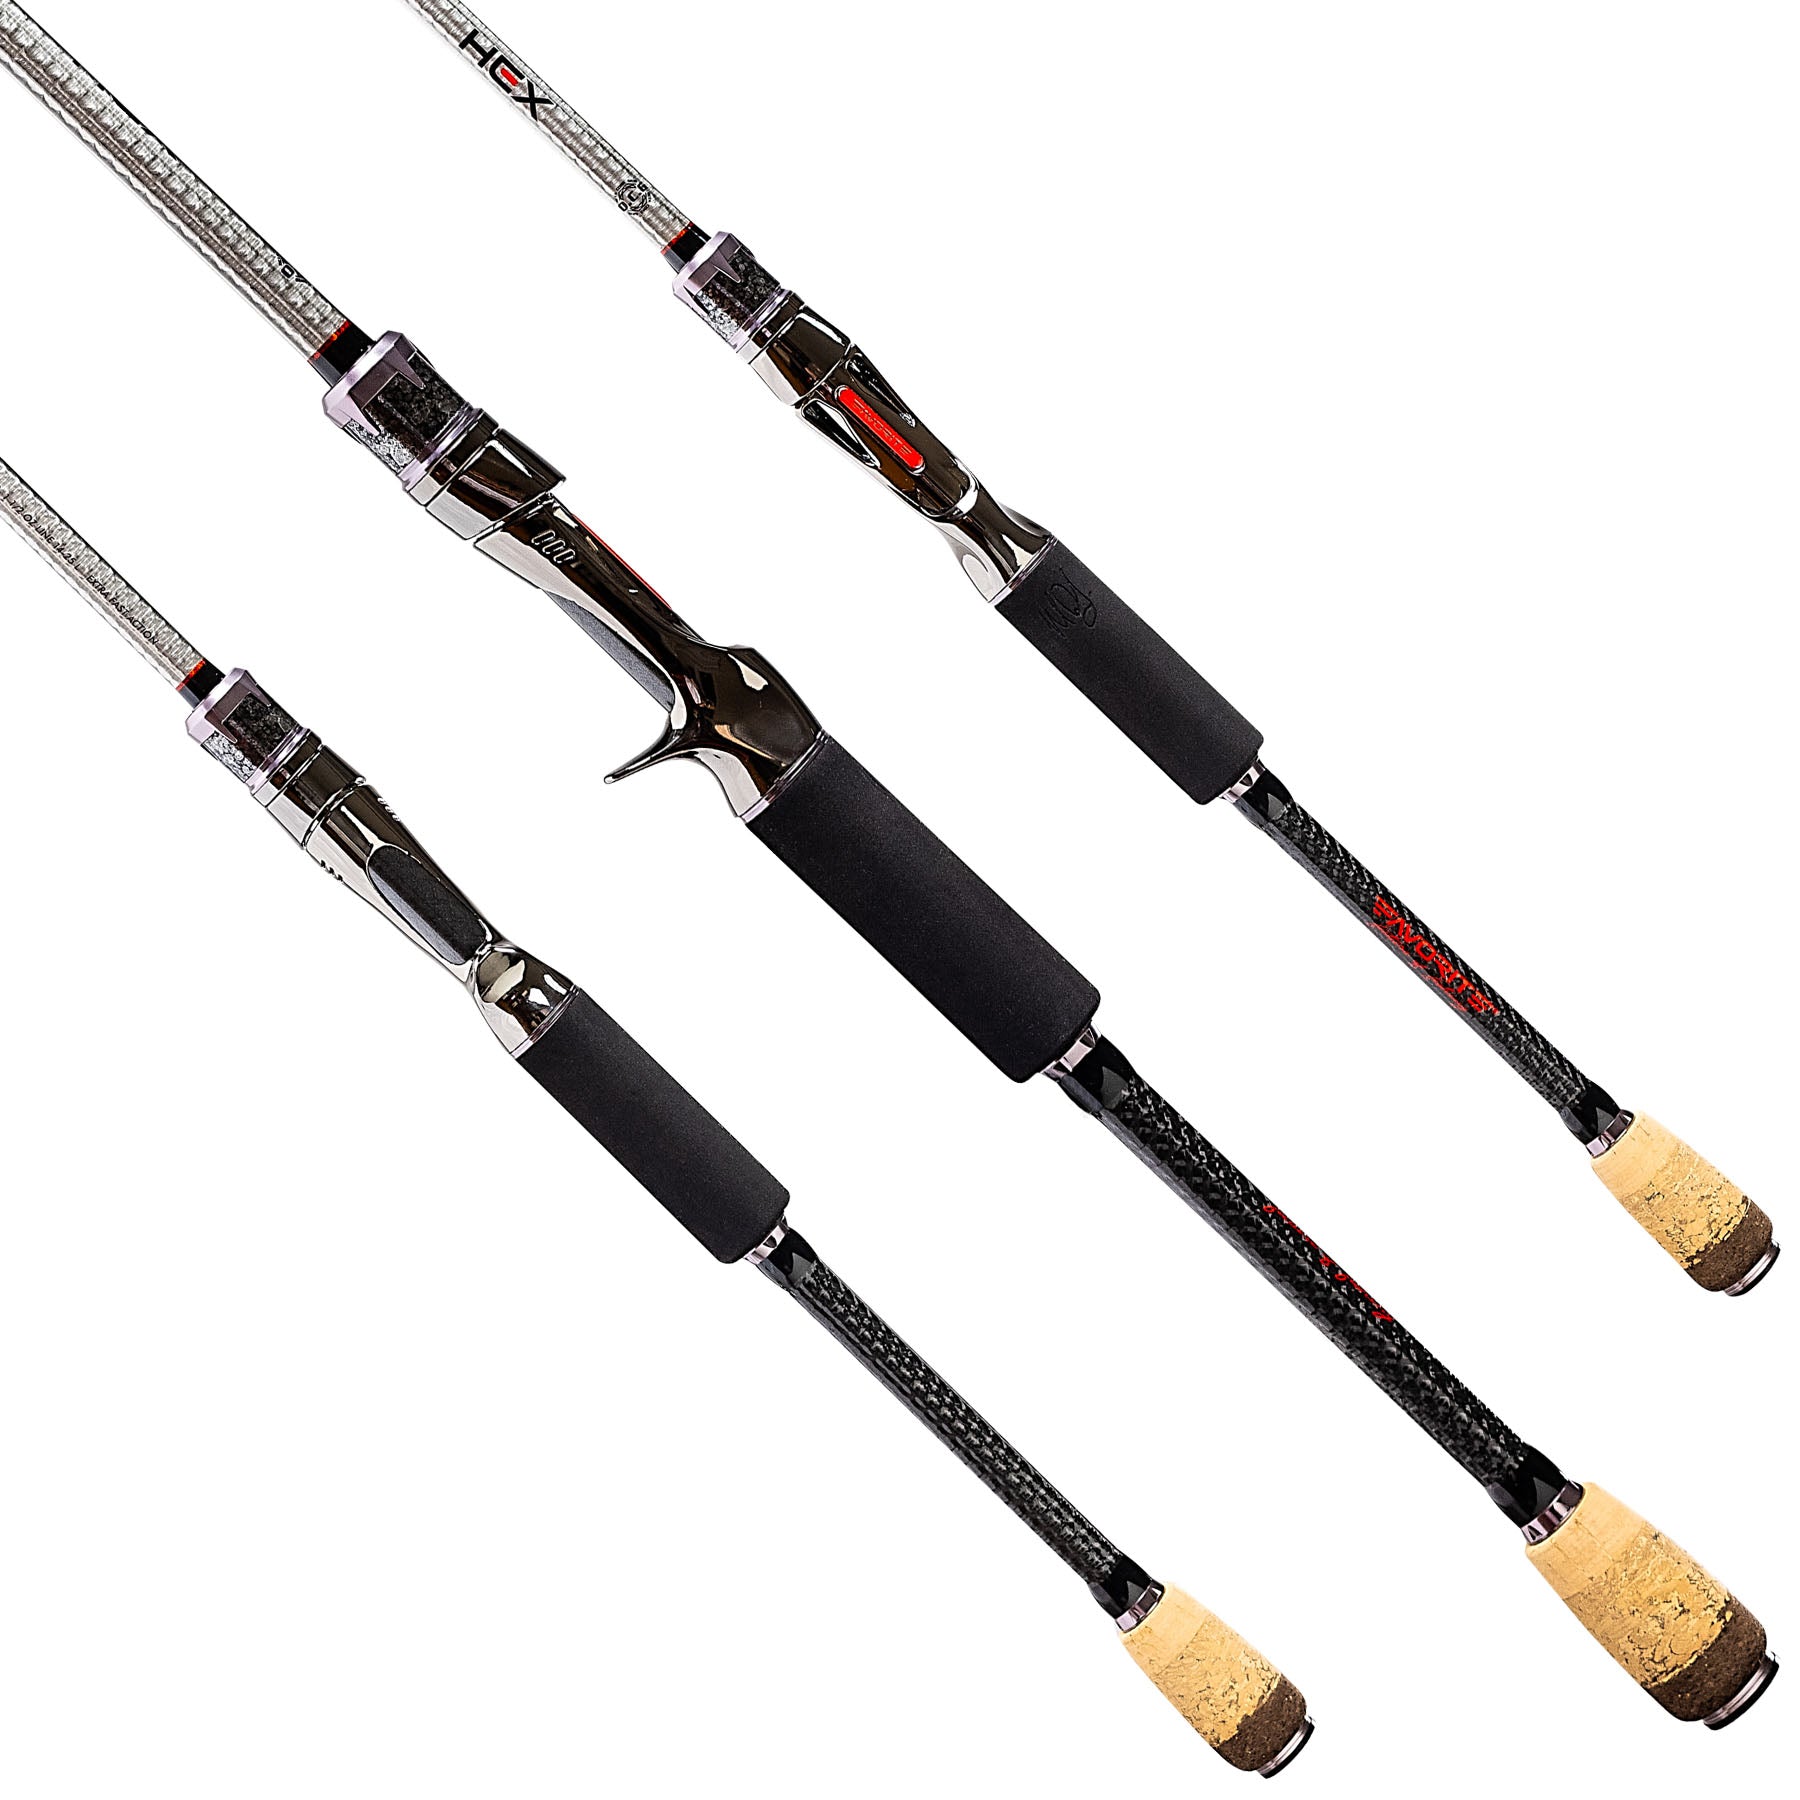 Signature Series: MDJ Hex Casting Rod | Favorite Fishing